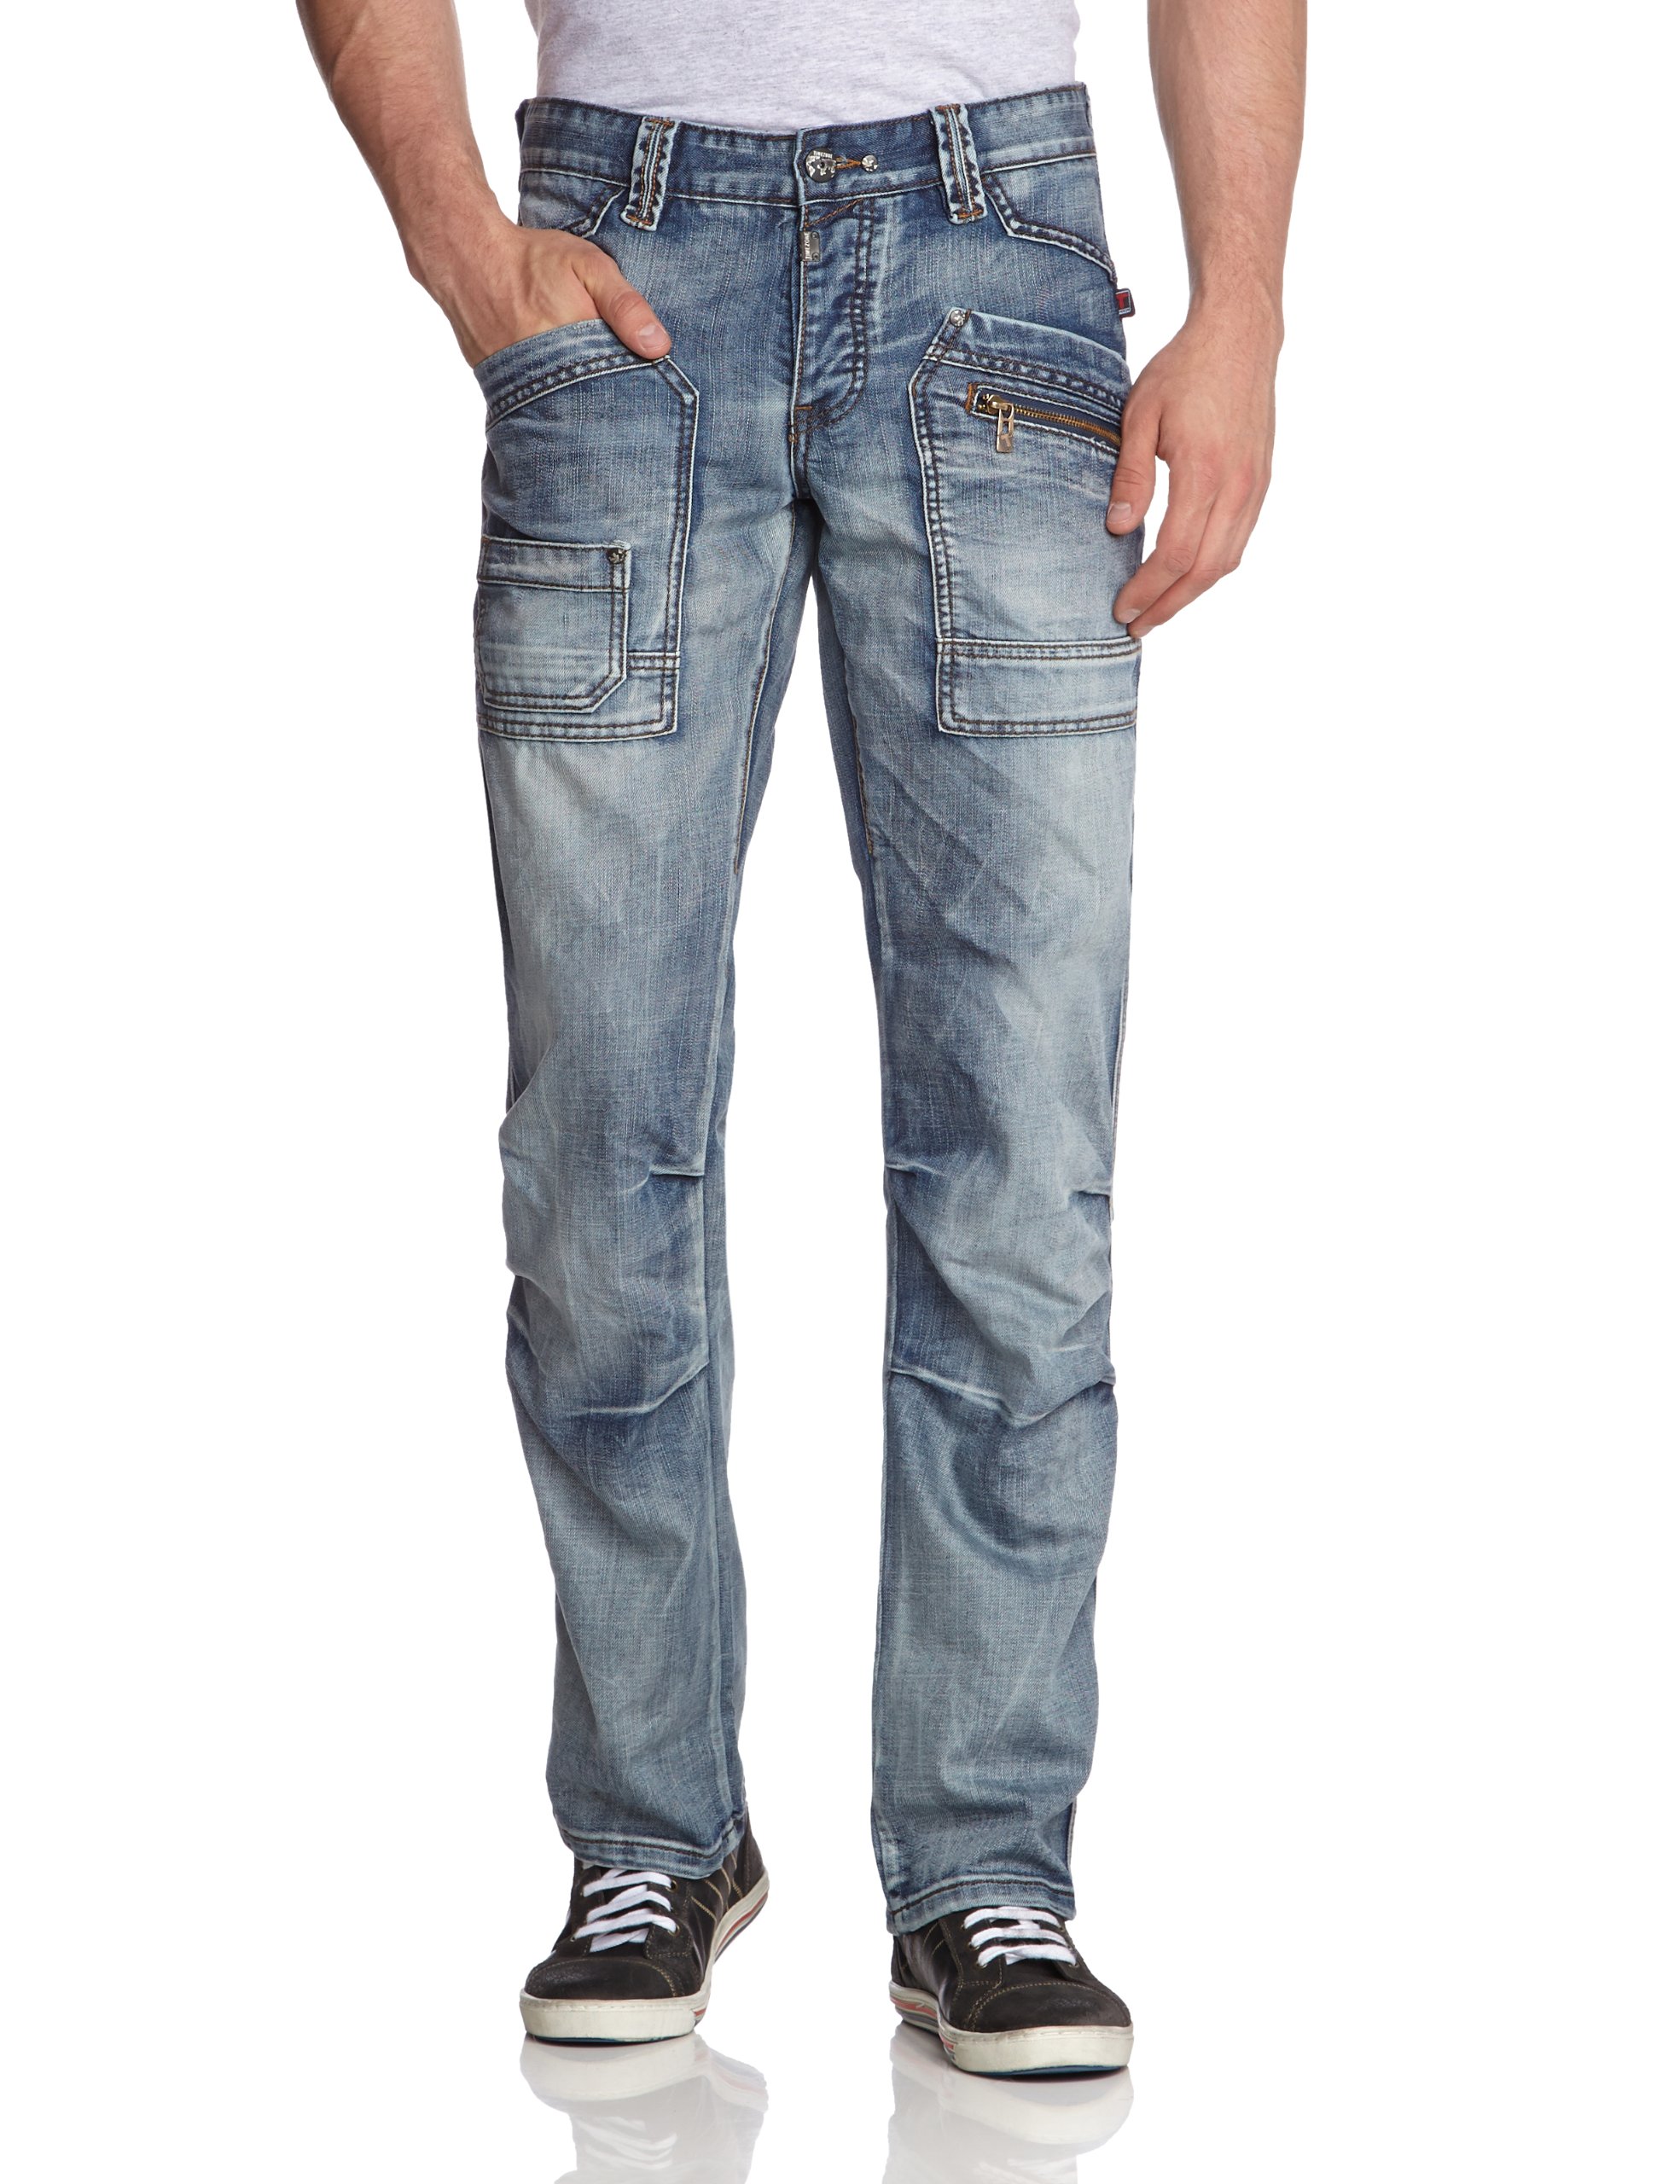 Timezone Herren Jeans Comfort Fit 26-5255 Clay, Gr. 38/34, Blau (cool wash 3212)